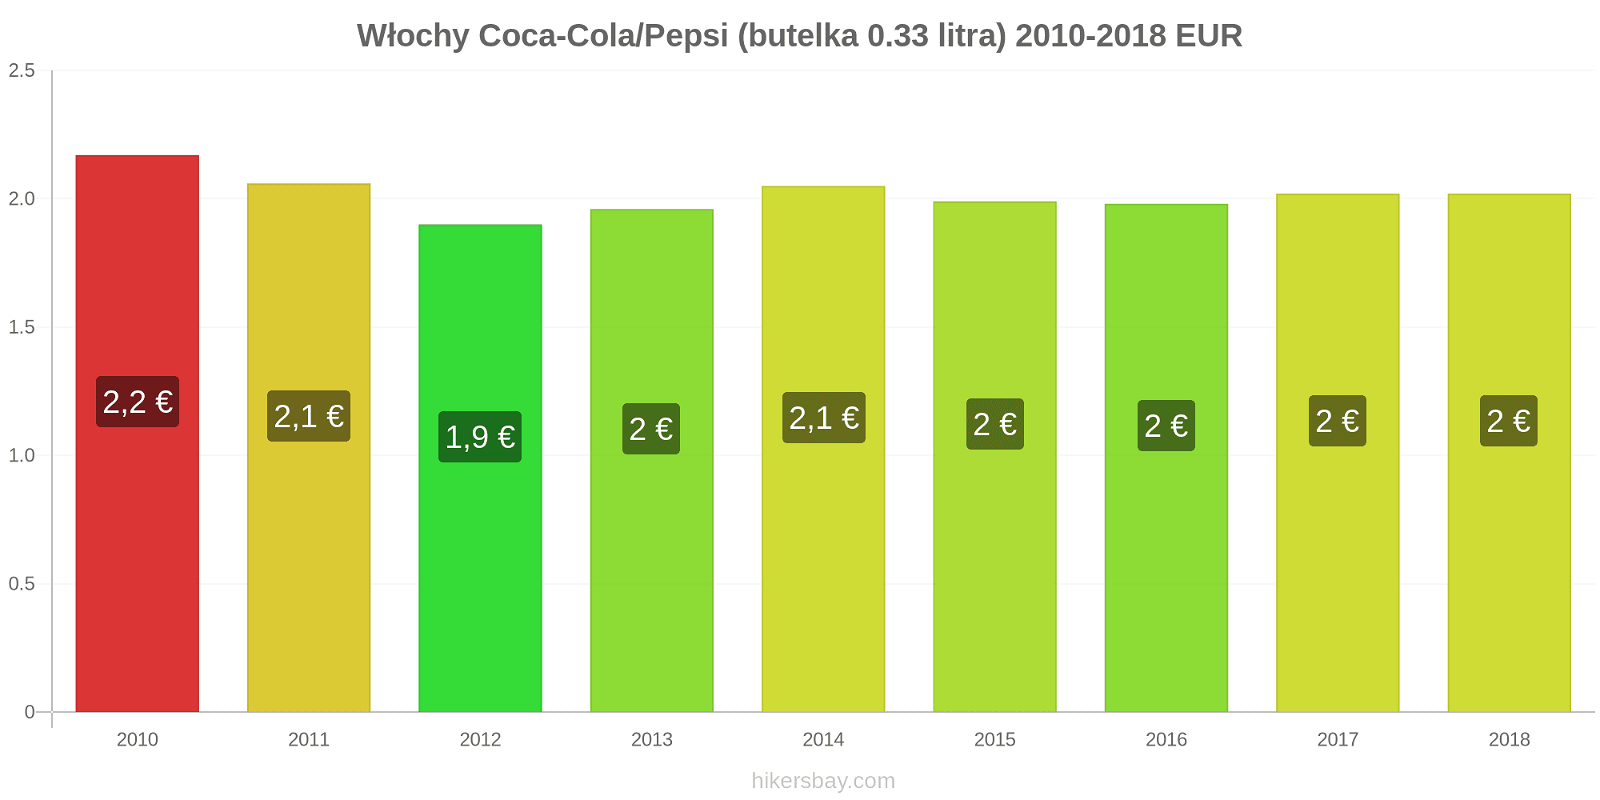 Włochy zmiany cen Coca-Cola/Pepsi (butelka 0.33 litra) hikersbay.com